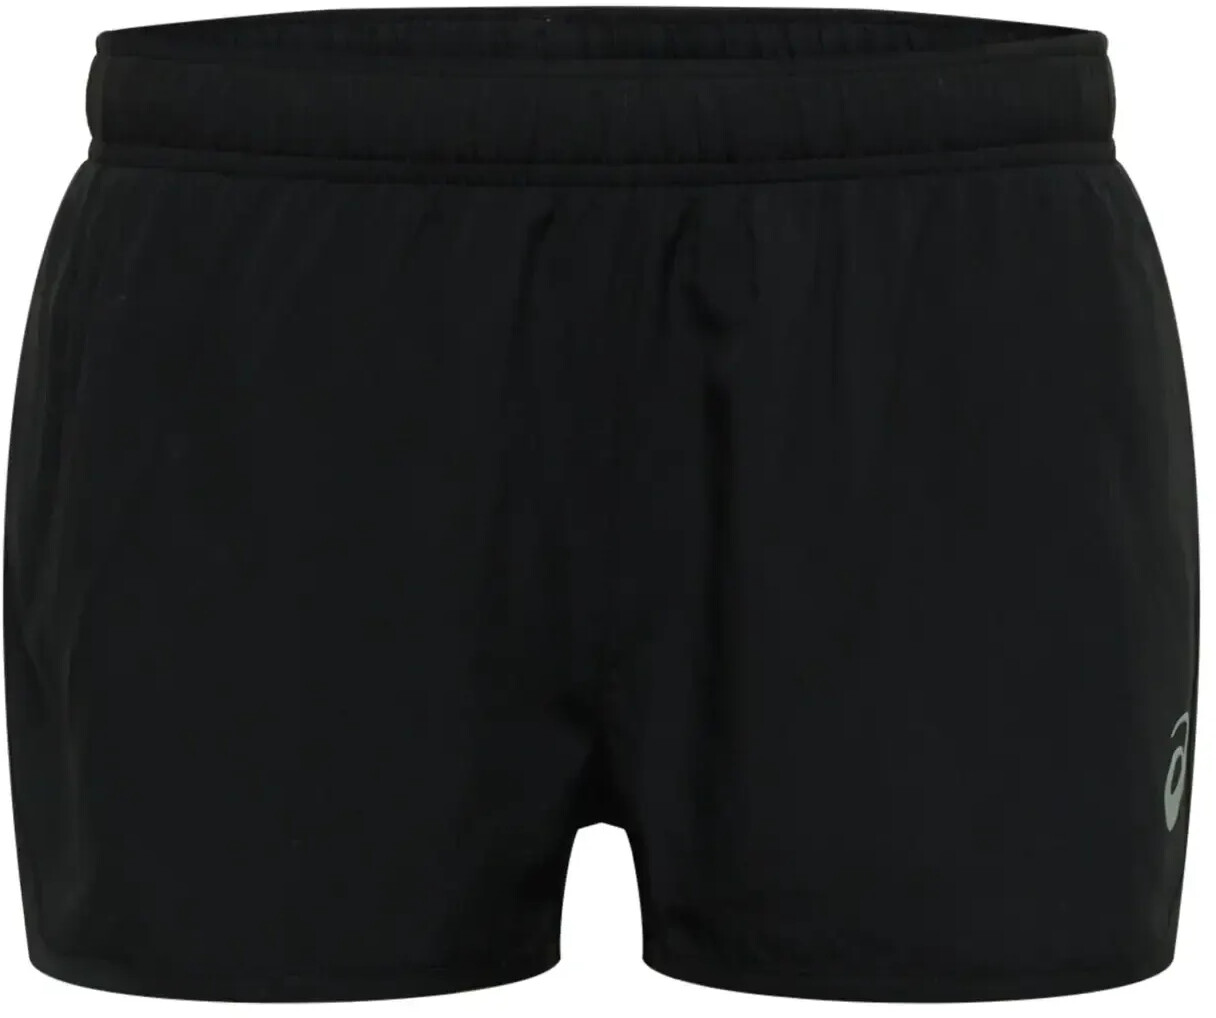 Asics Core Split Shorts performance black ab 22,95 € | Preisvergleich bei